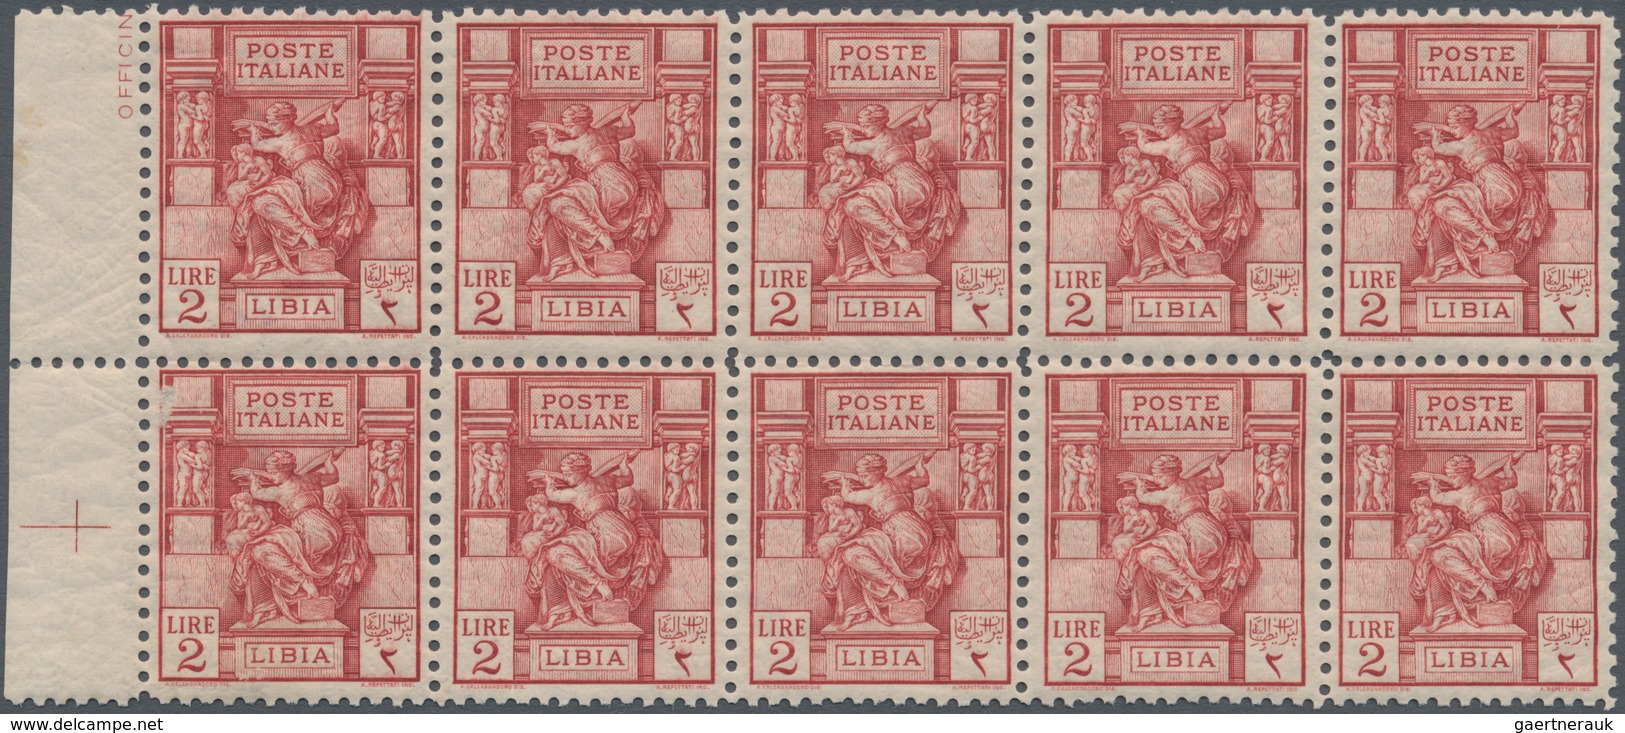 Italienisch-Libyen: 1926, Definitive Issue 2l. Carmine ‚Libyan Sybille‘ Perf. 11 In A Lot With 40 St - Libië